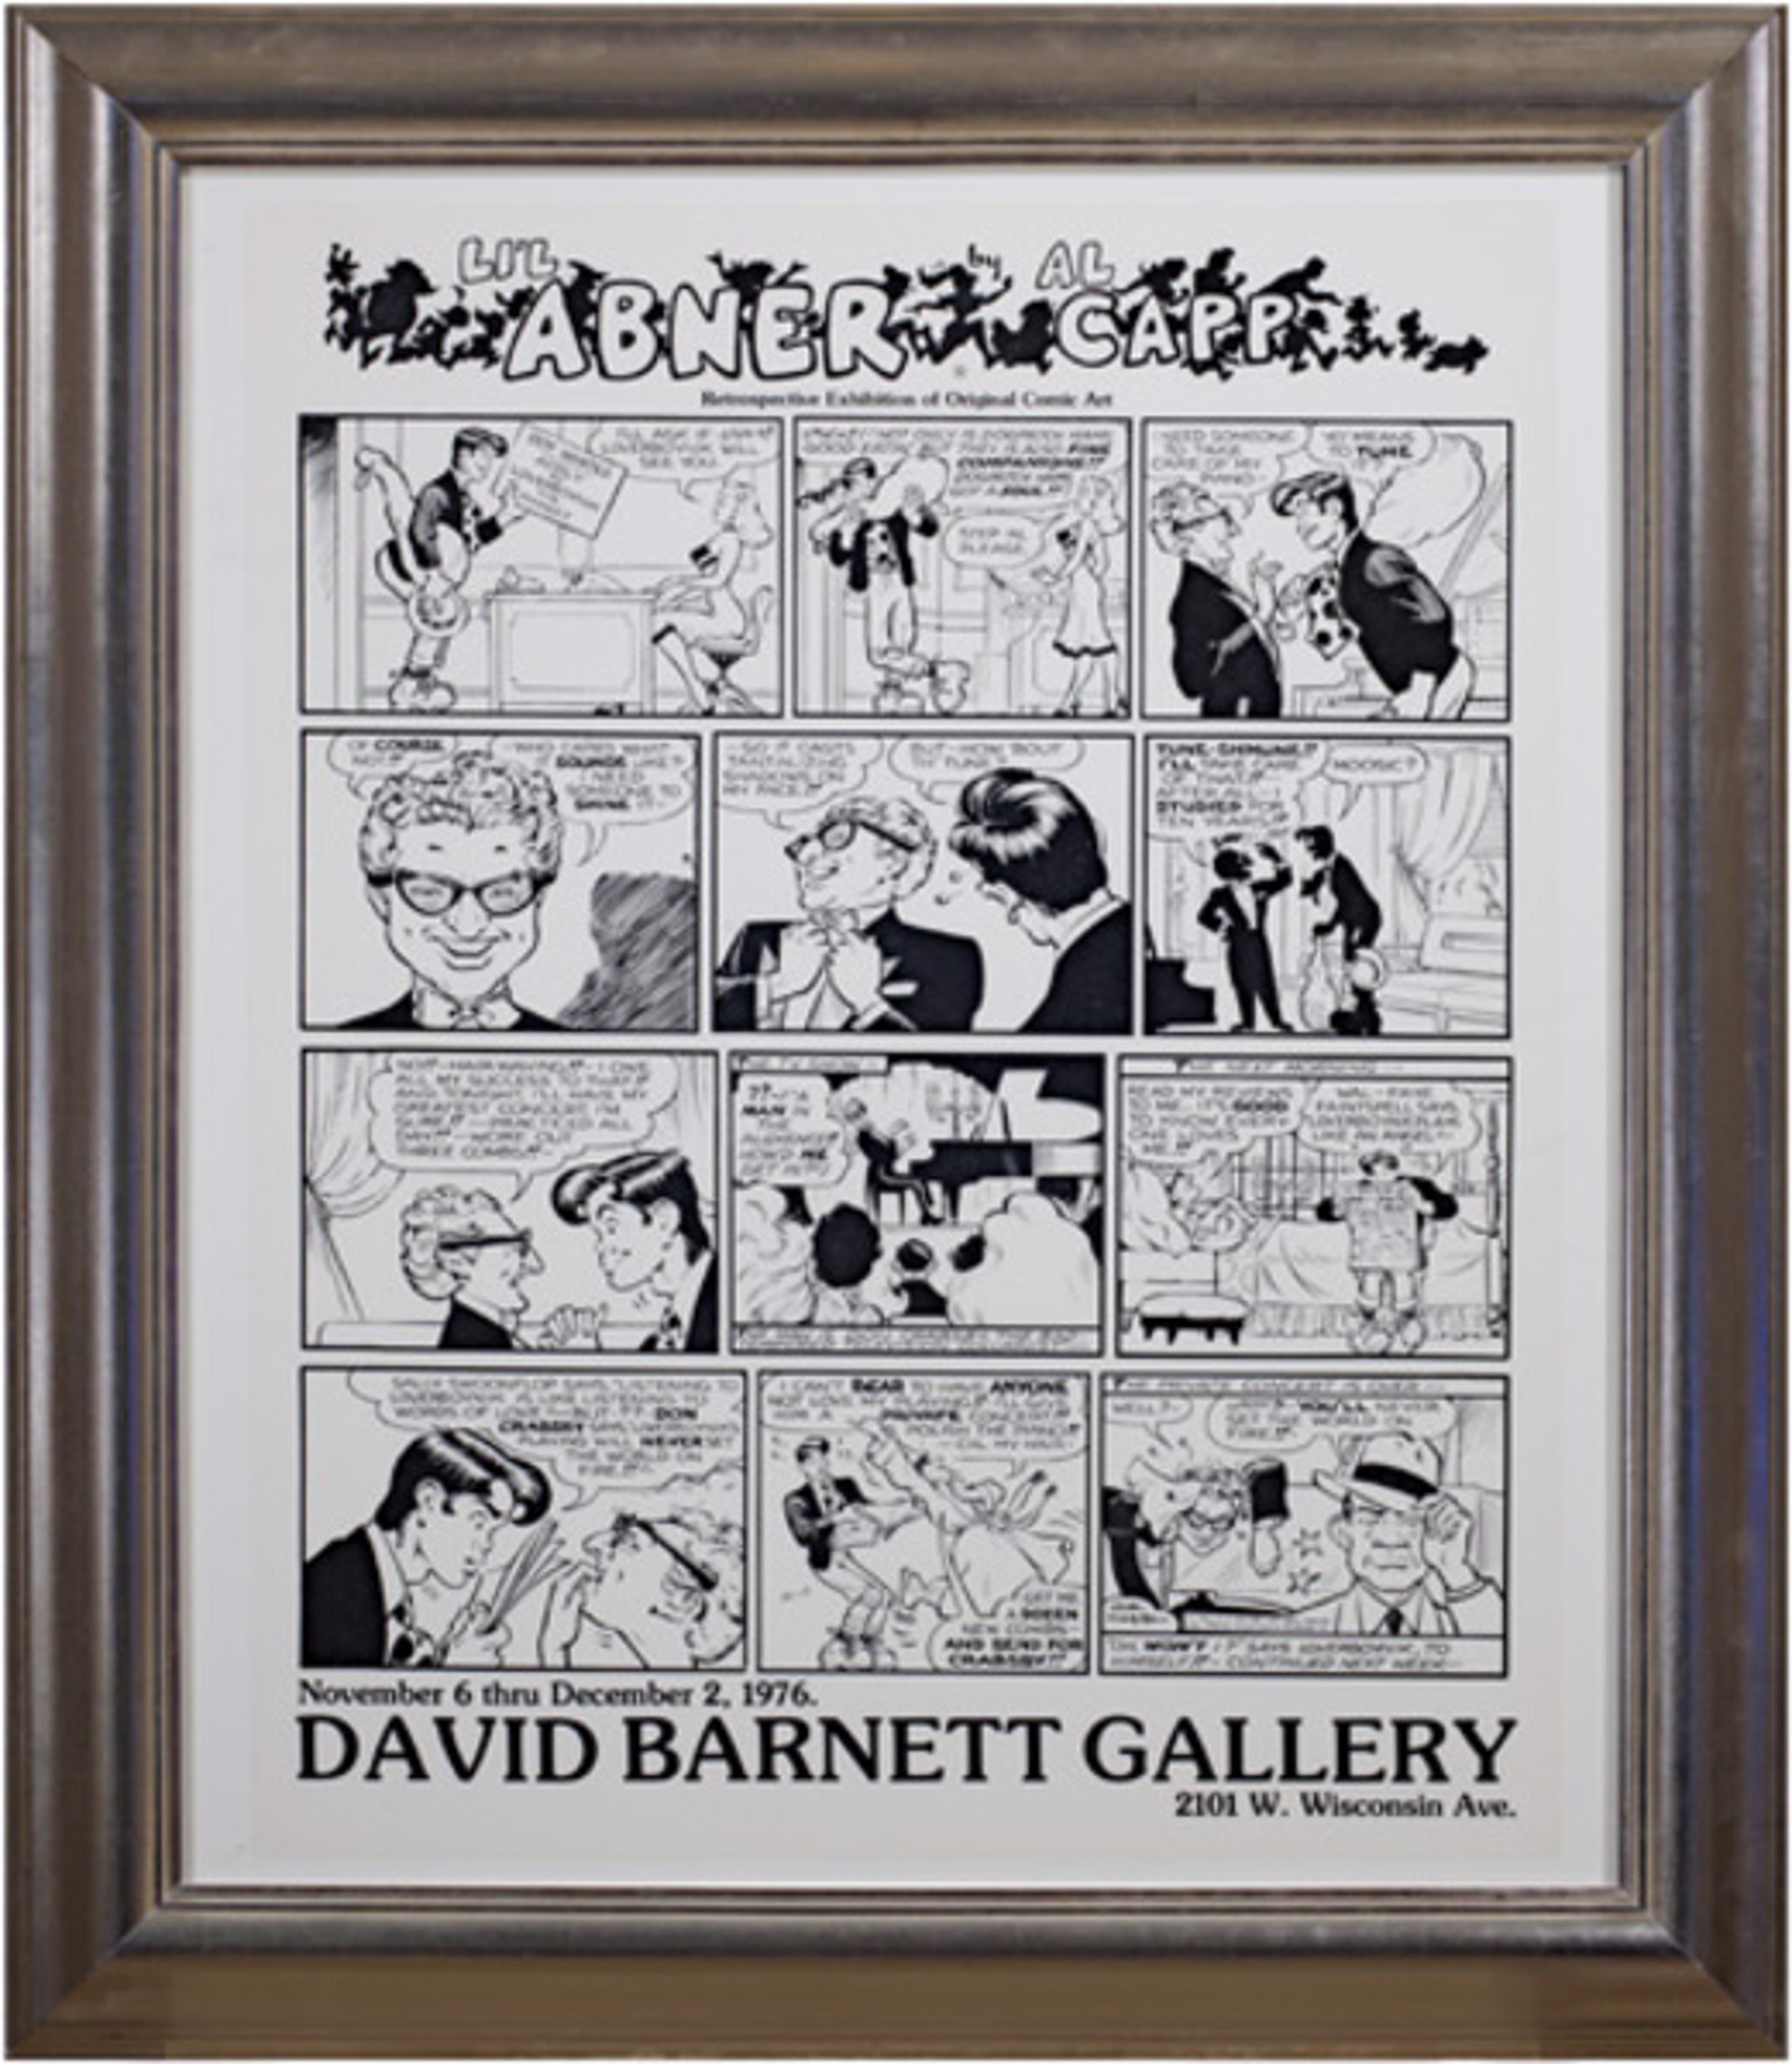 Li'l Abner - Retrospective Exhibition of Original Comic Art, David Barnett Gallery by Al Capp